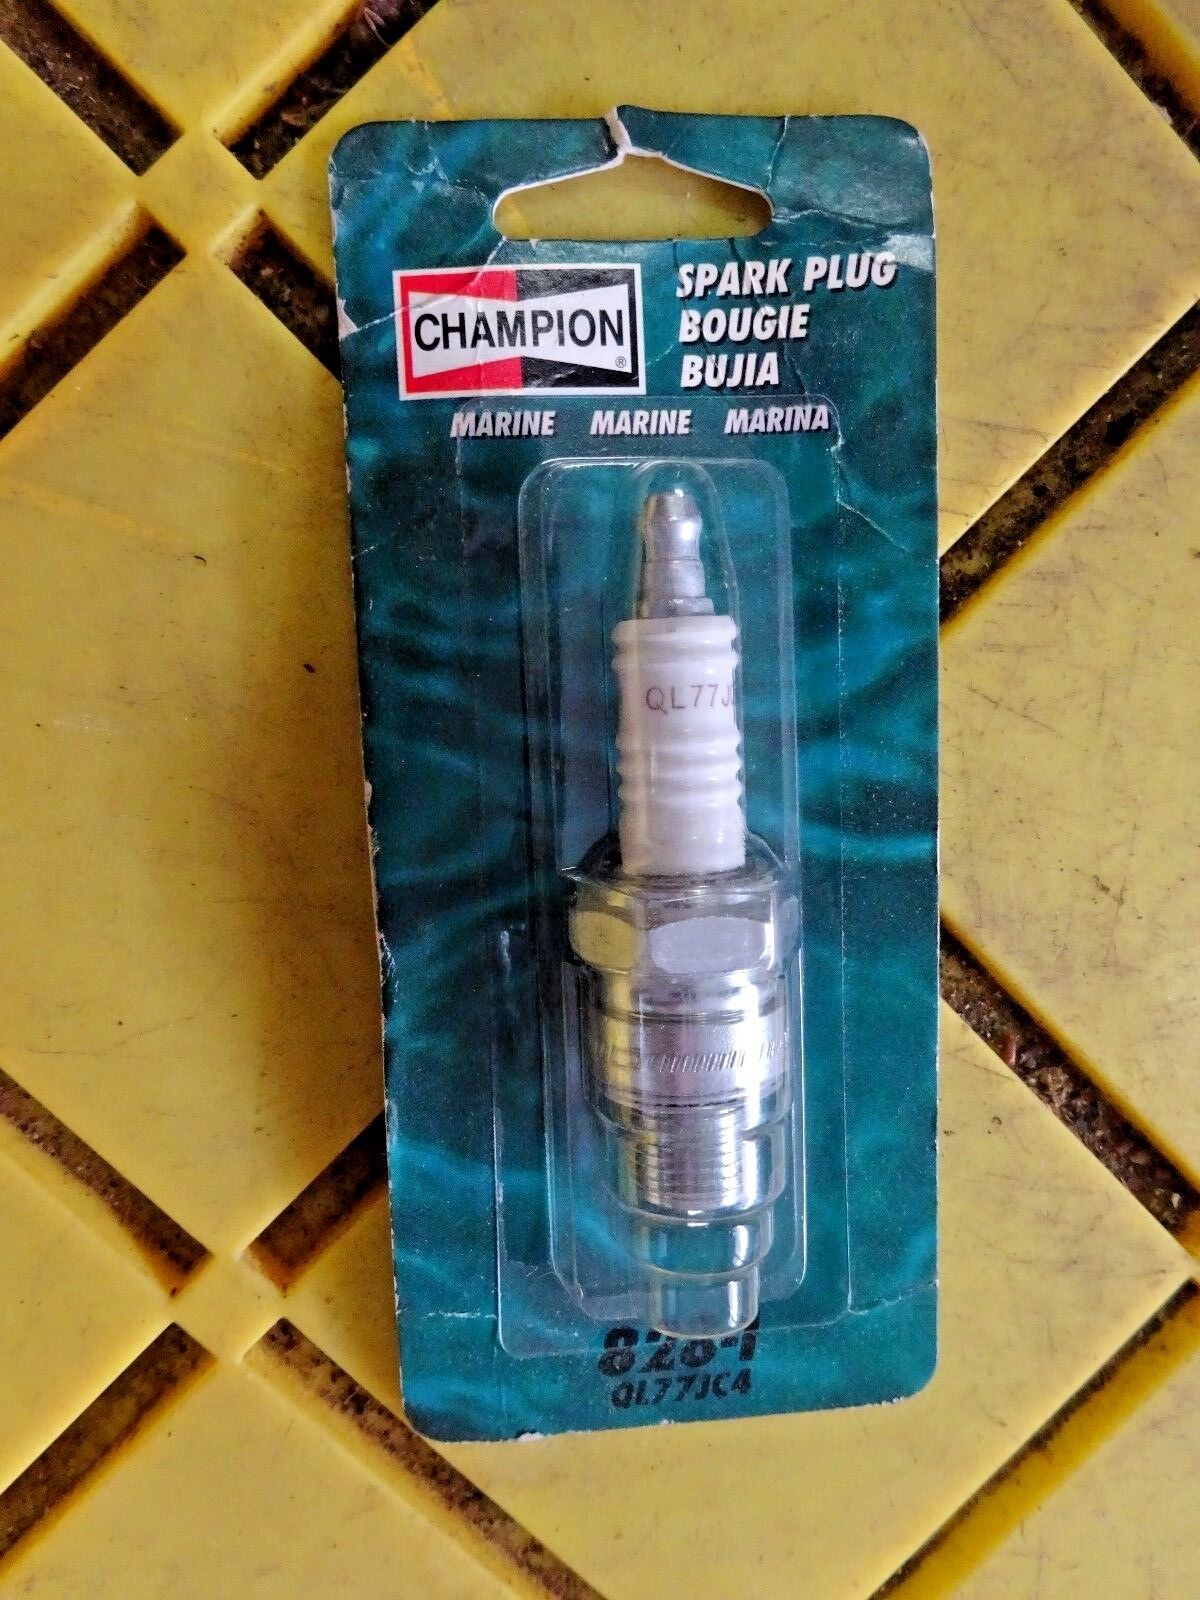 Champion 828-1 Spark Plug (Ql77Jc4)